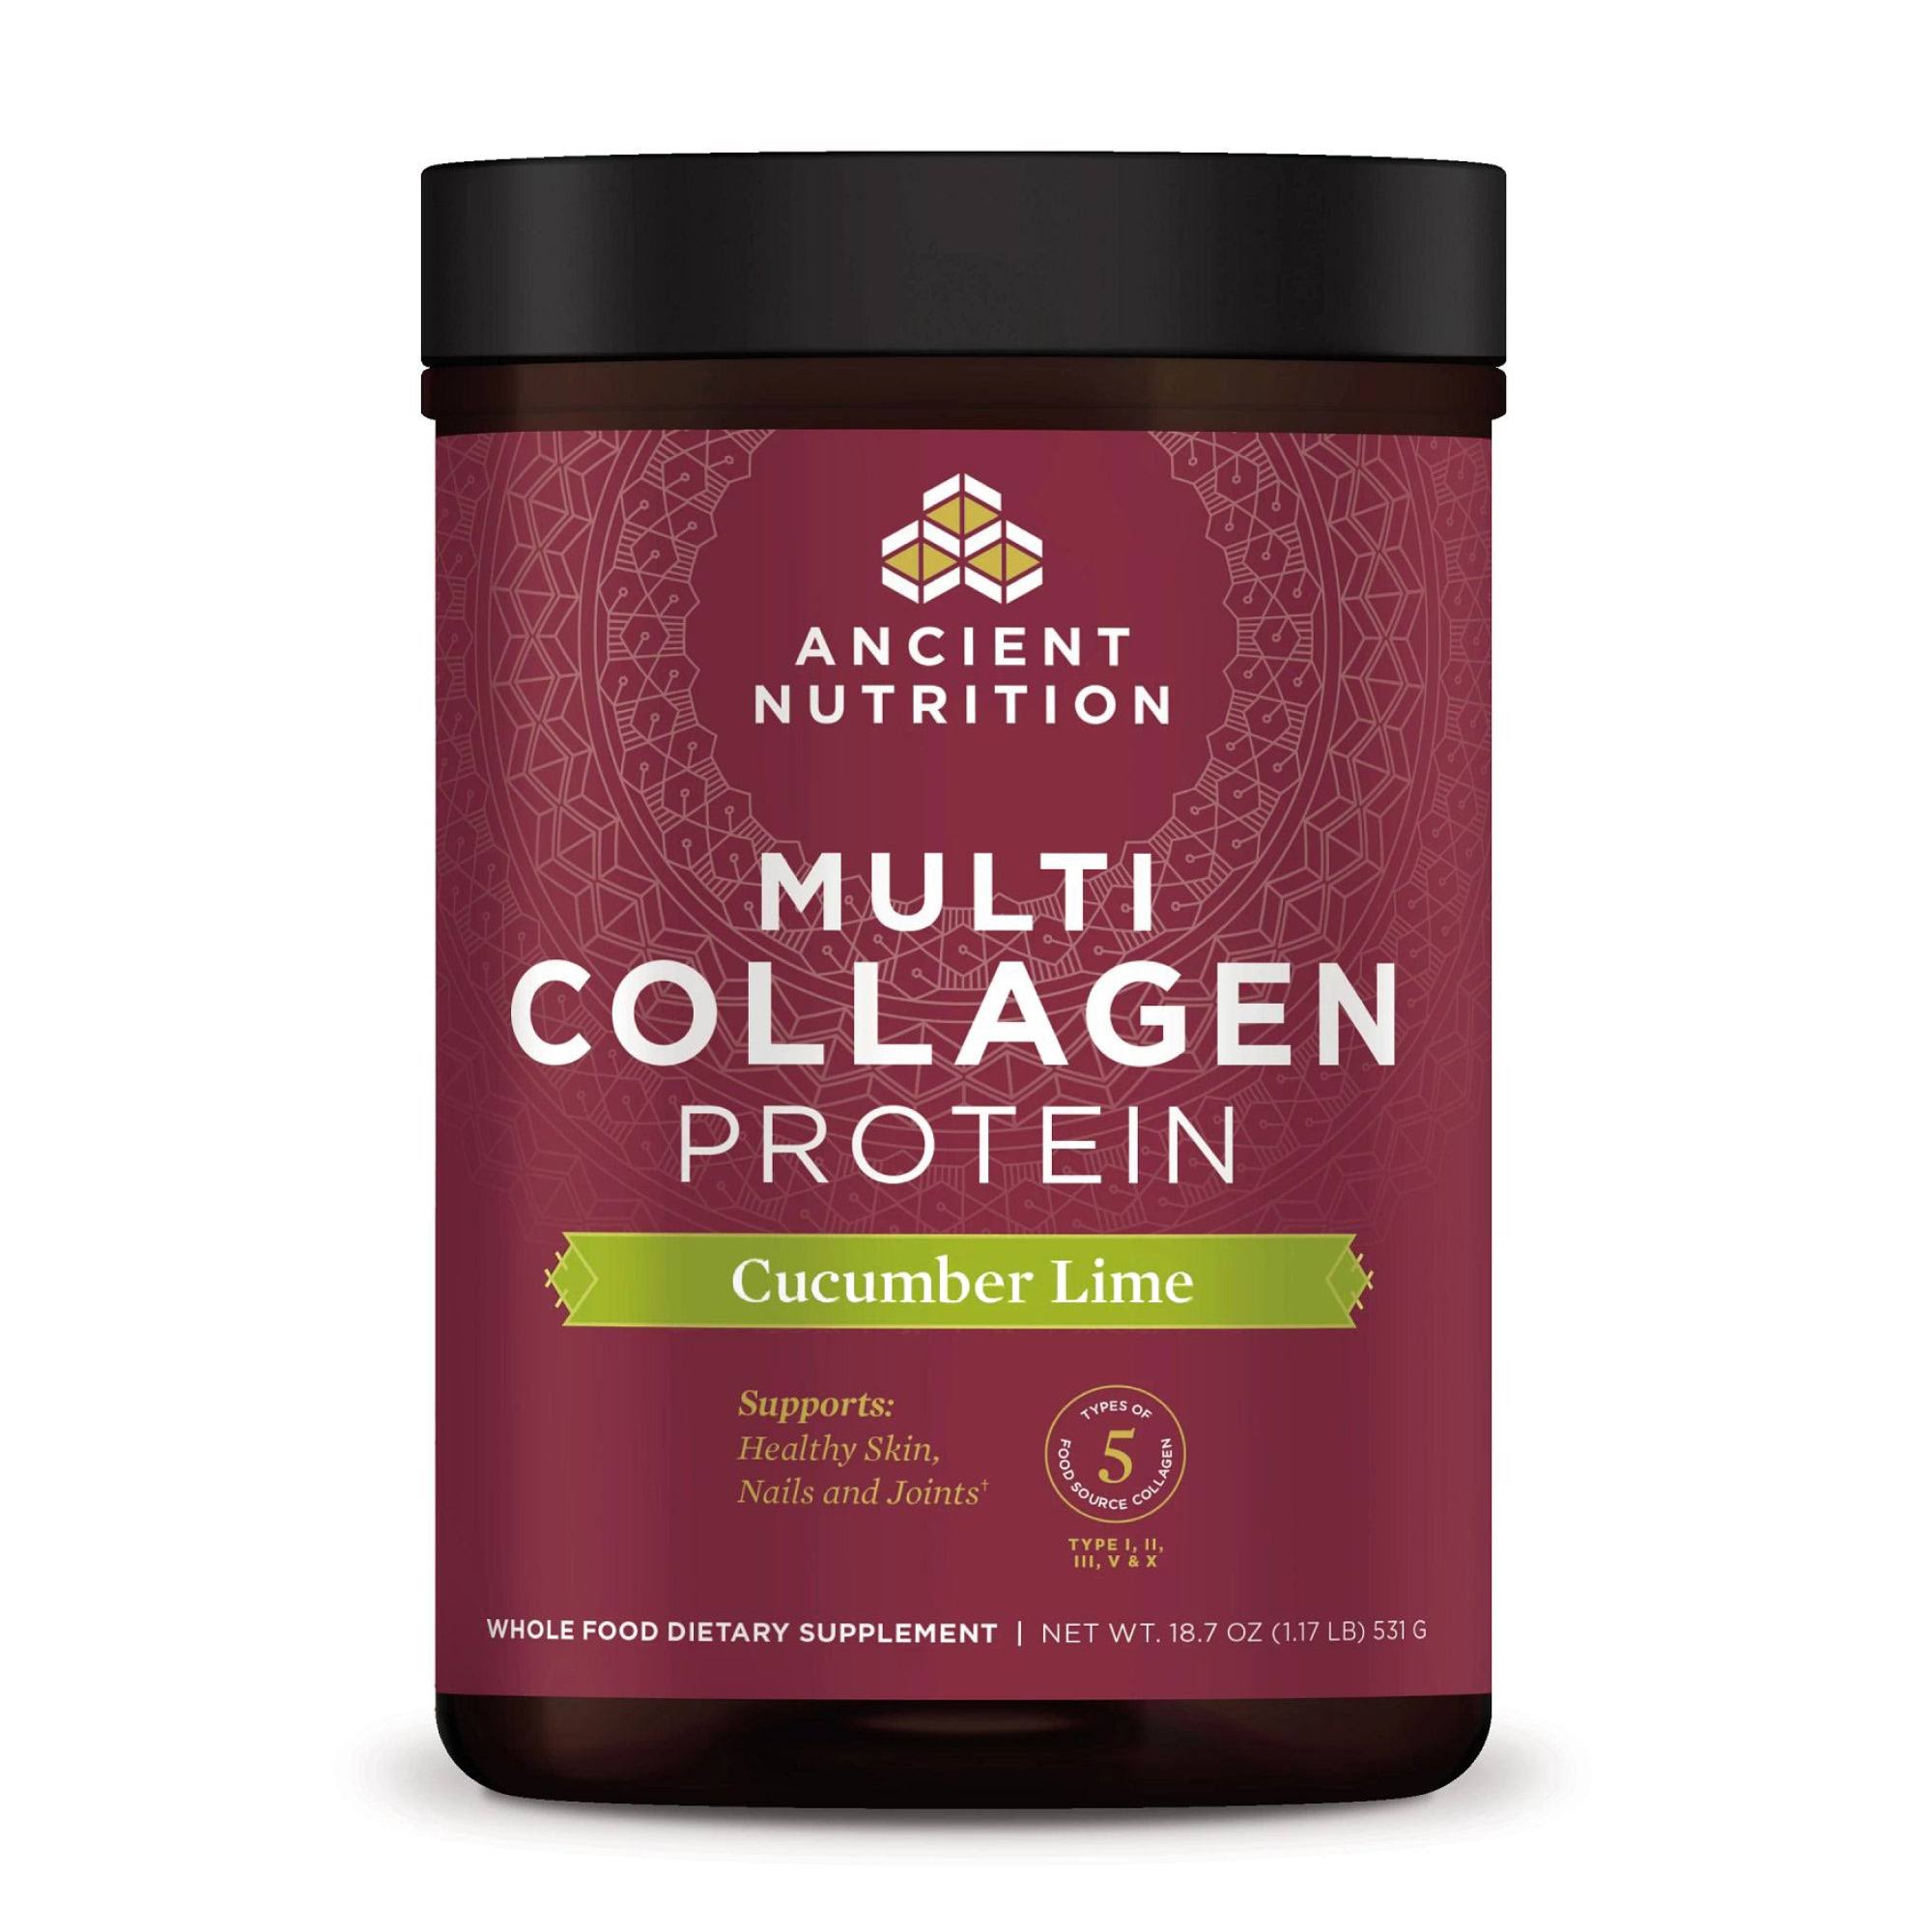 Ancient Nutrition Multi Collagen Protein Powder - Cucumber Lime, 530g